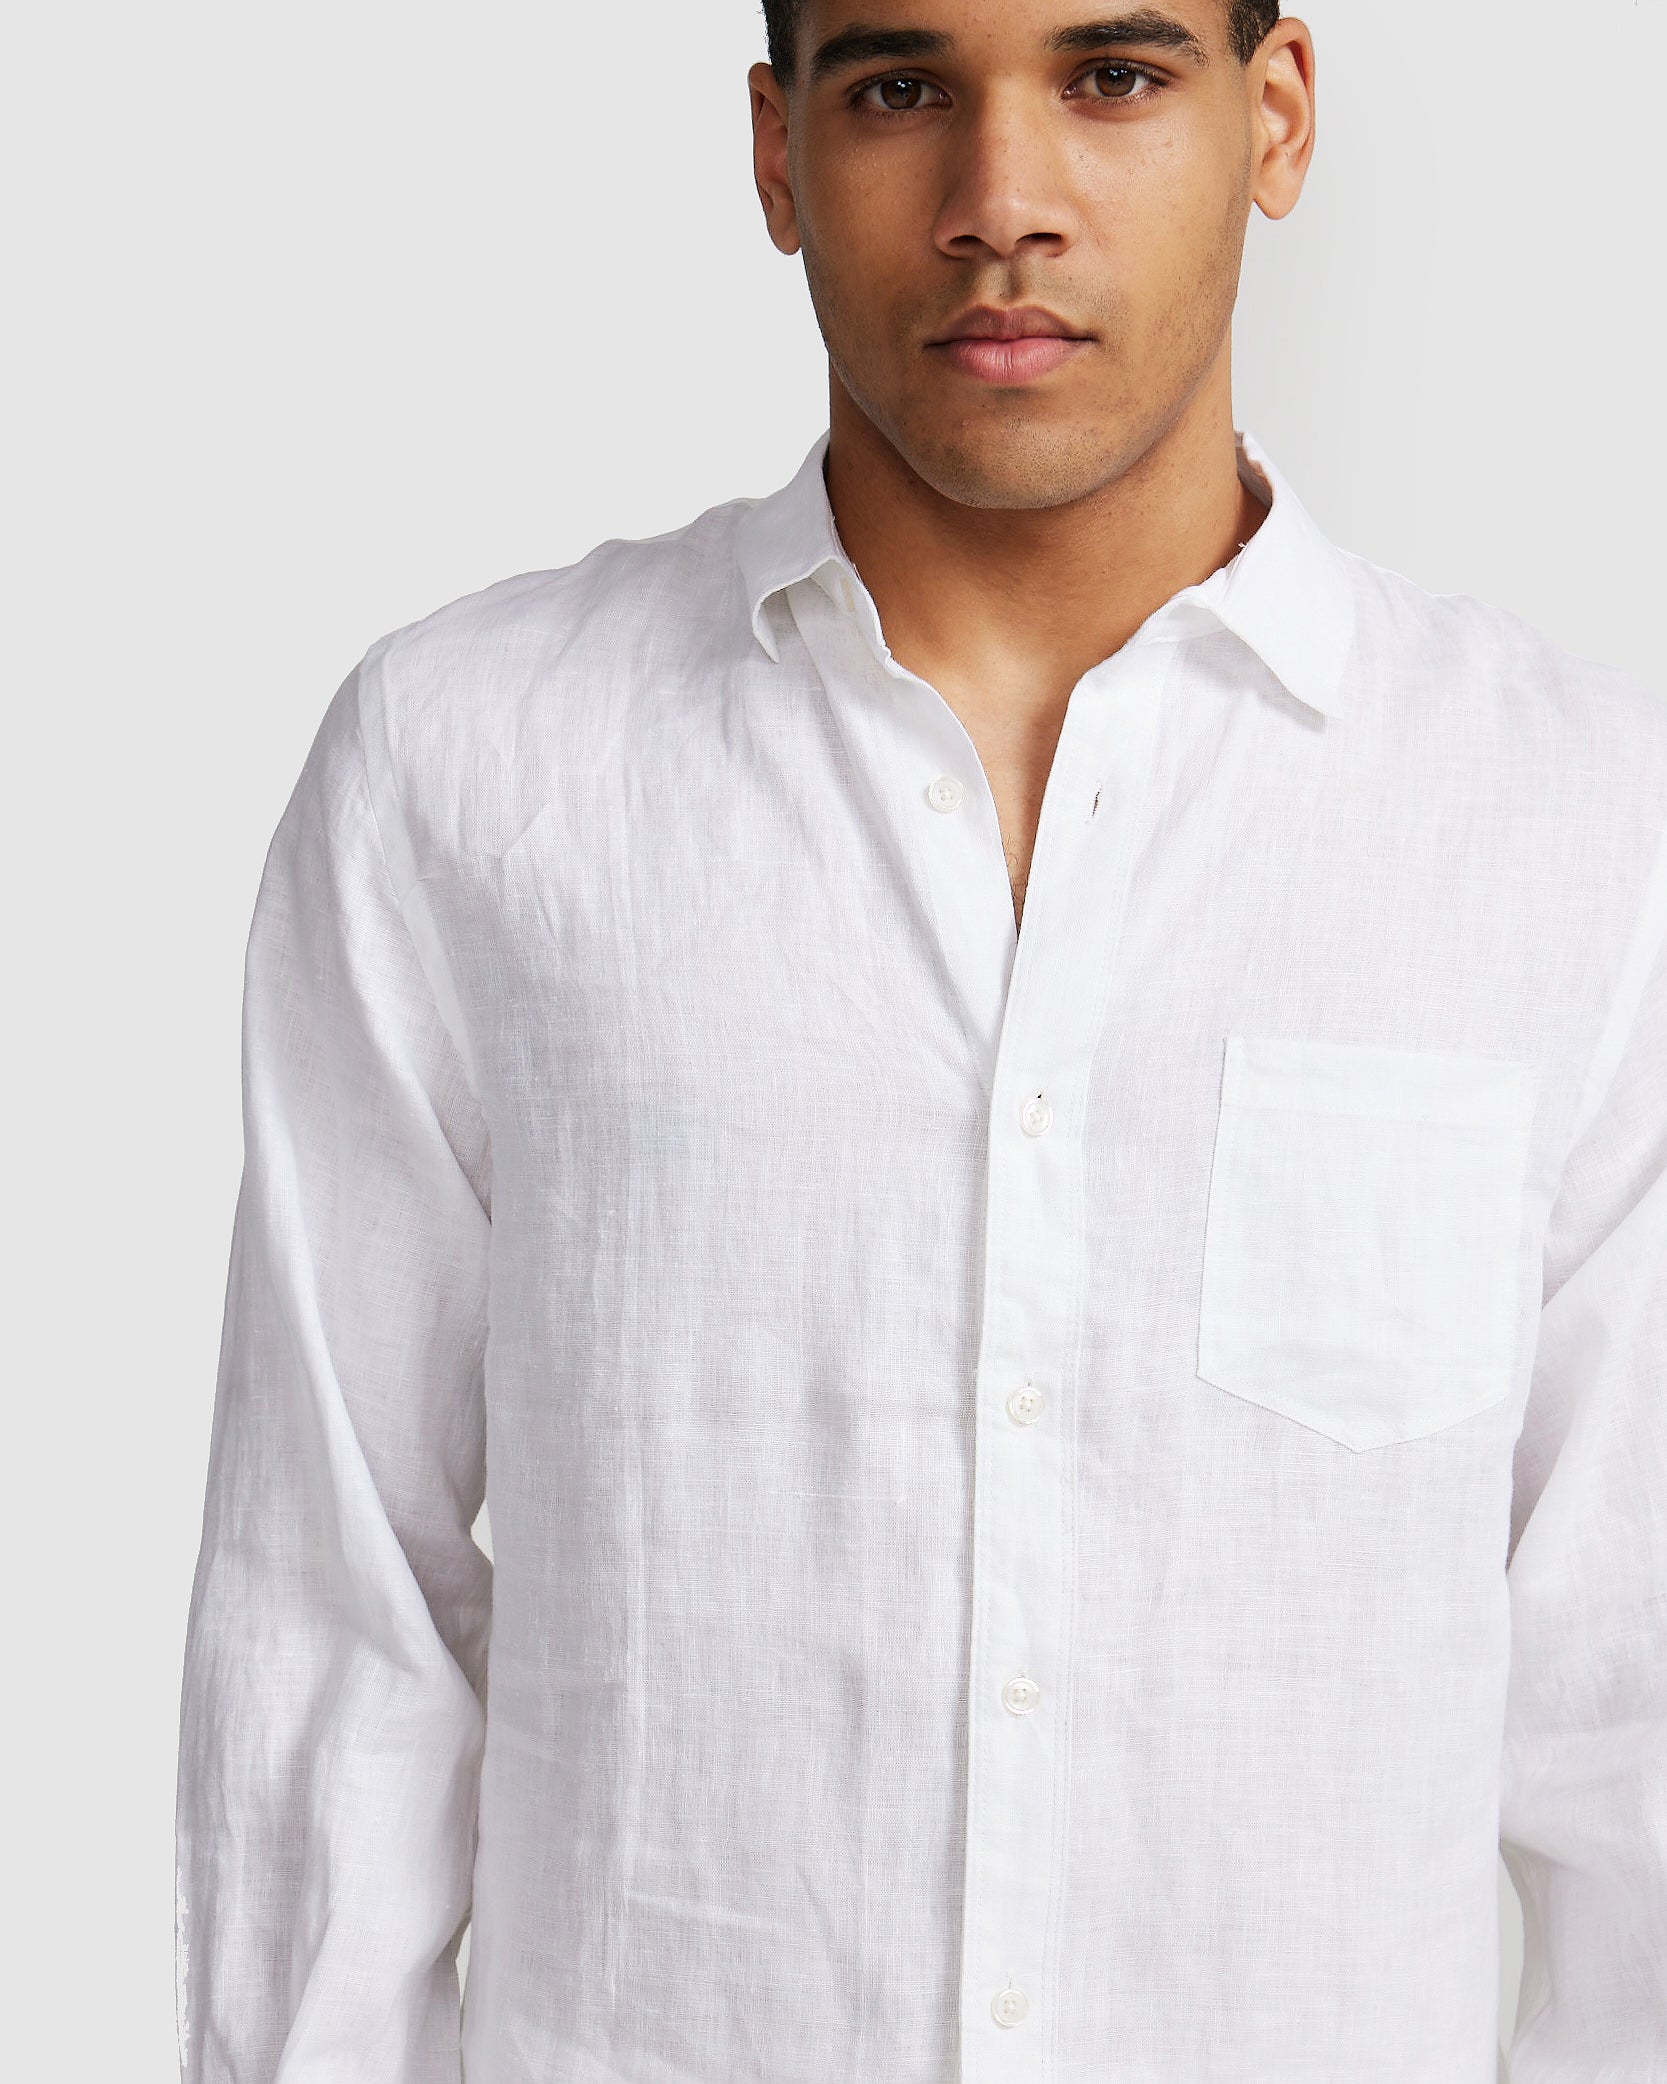 ORTC Mens Linen Shirt